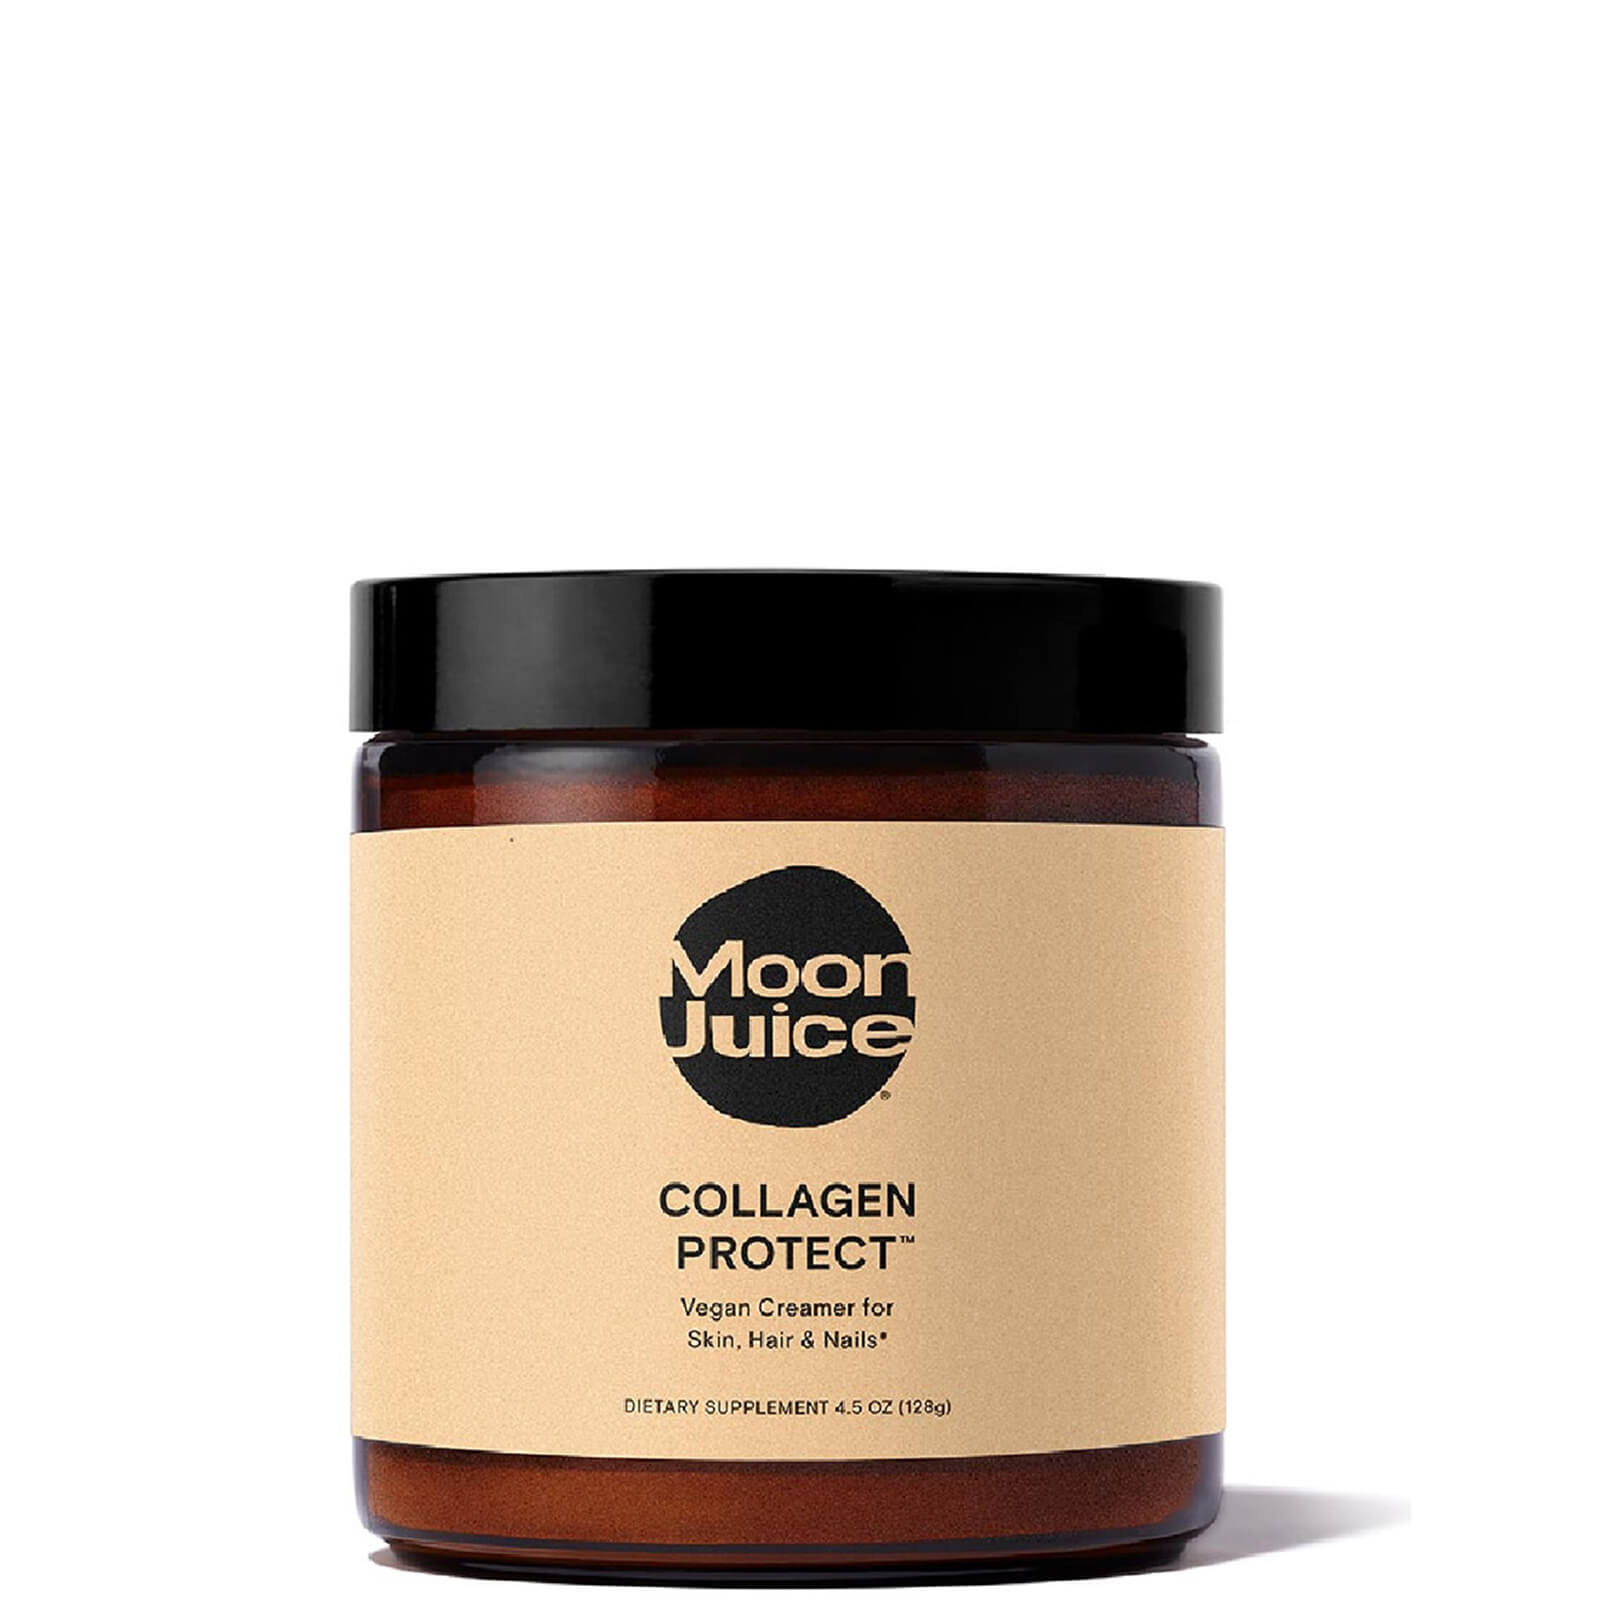 Moon Juice Collagen Protect 4.5 oz lookfantastic.com imagine